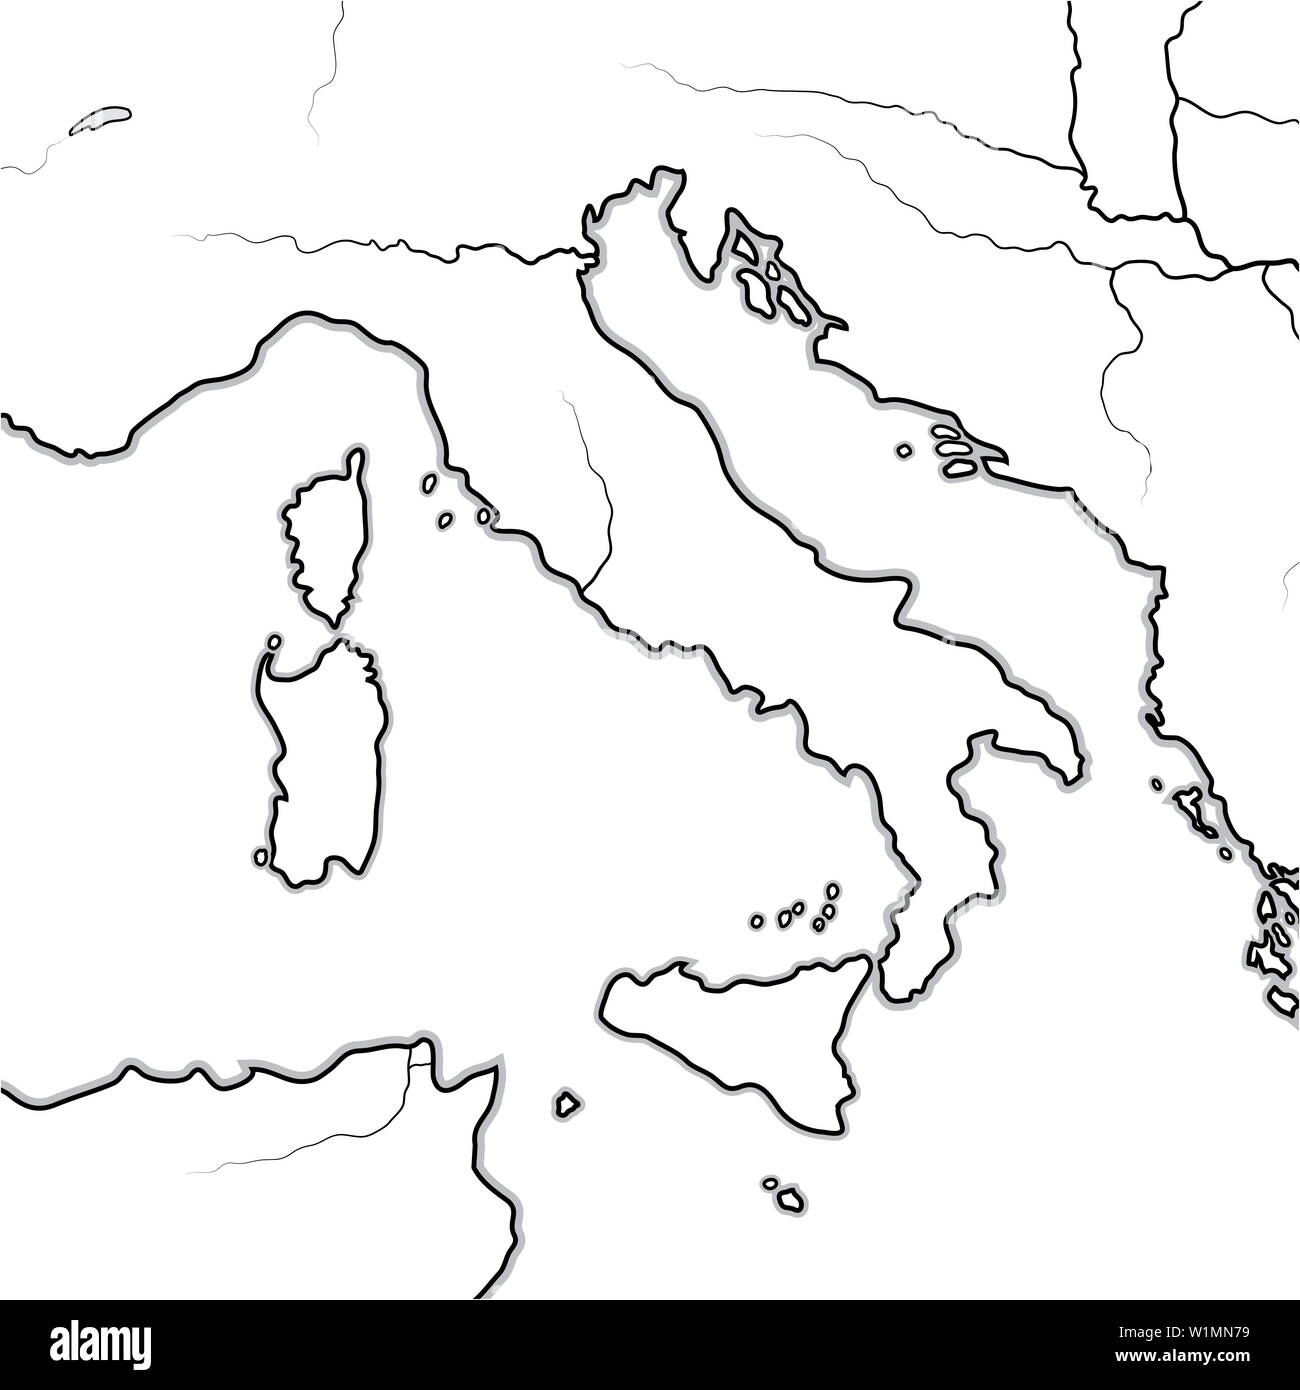 Mappa delle terre italiane: Italia, Toscana, Lombardia, Sicilia, Liguria, Umbria, Campania, Neapolitania, l'Appennino, la penisola italiana. Foto Stock